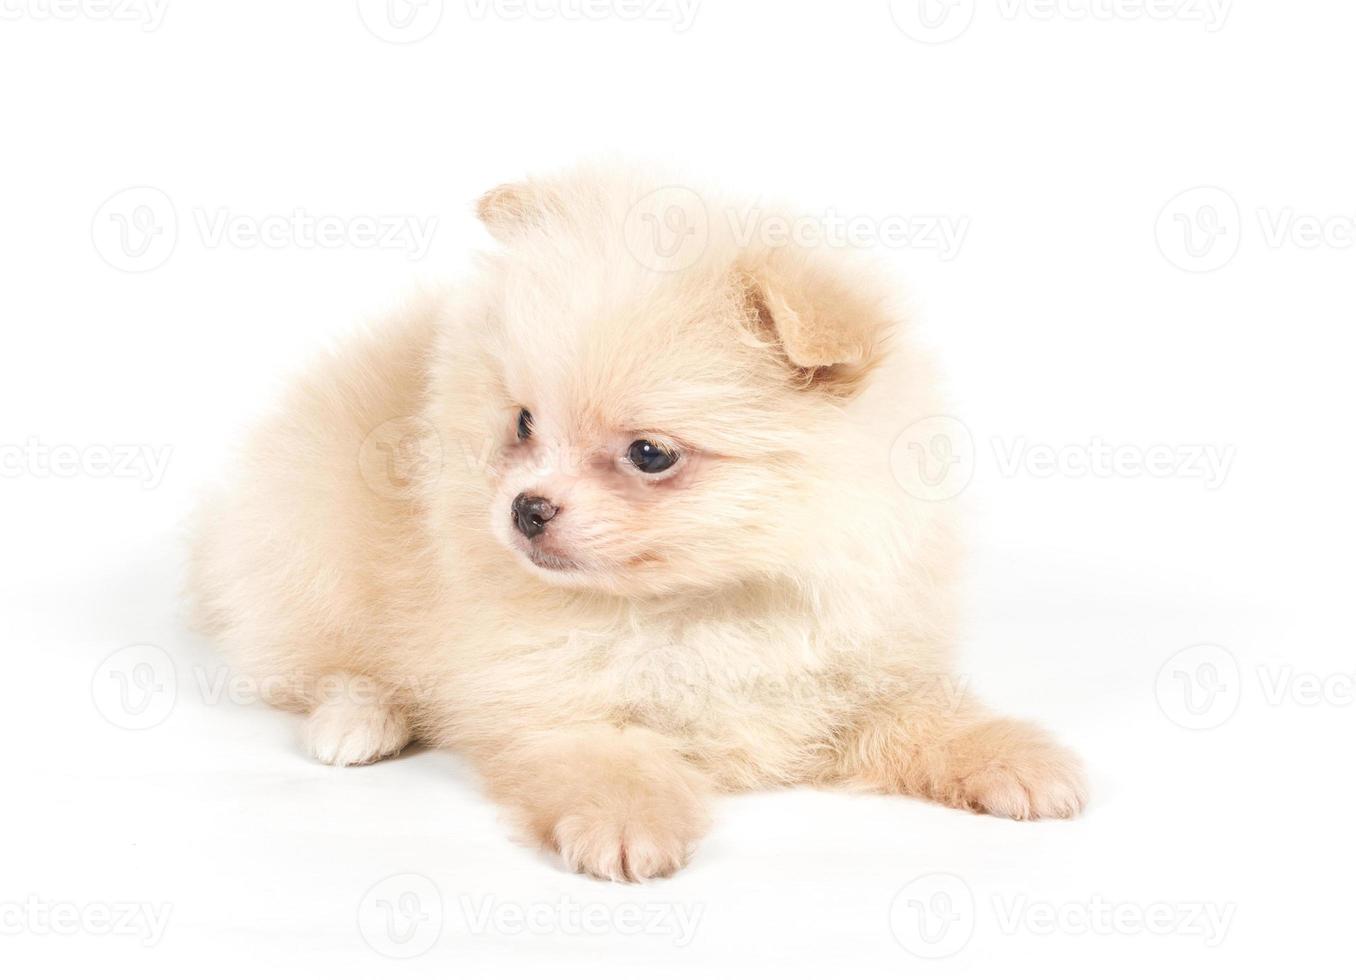 Pomeranian Spitz puppy on a white background photo